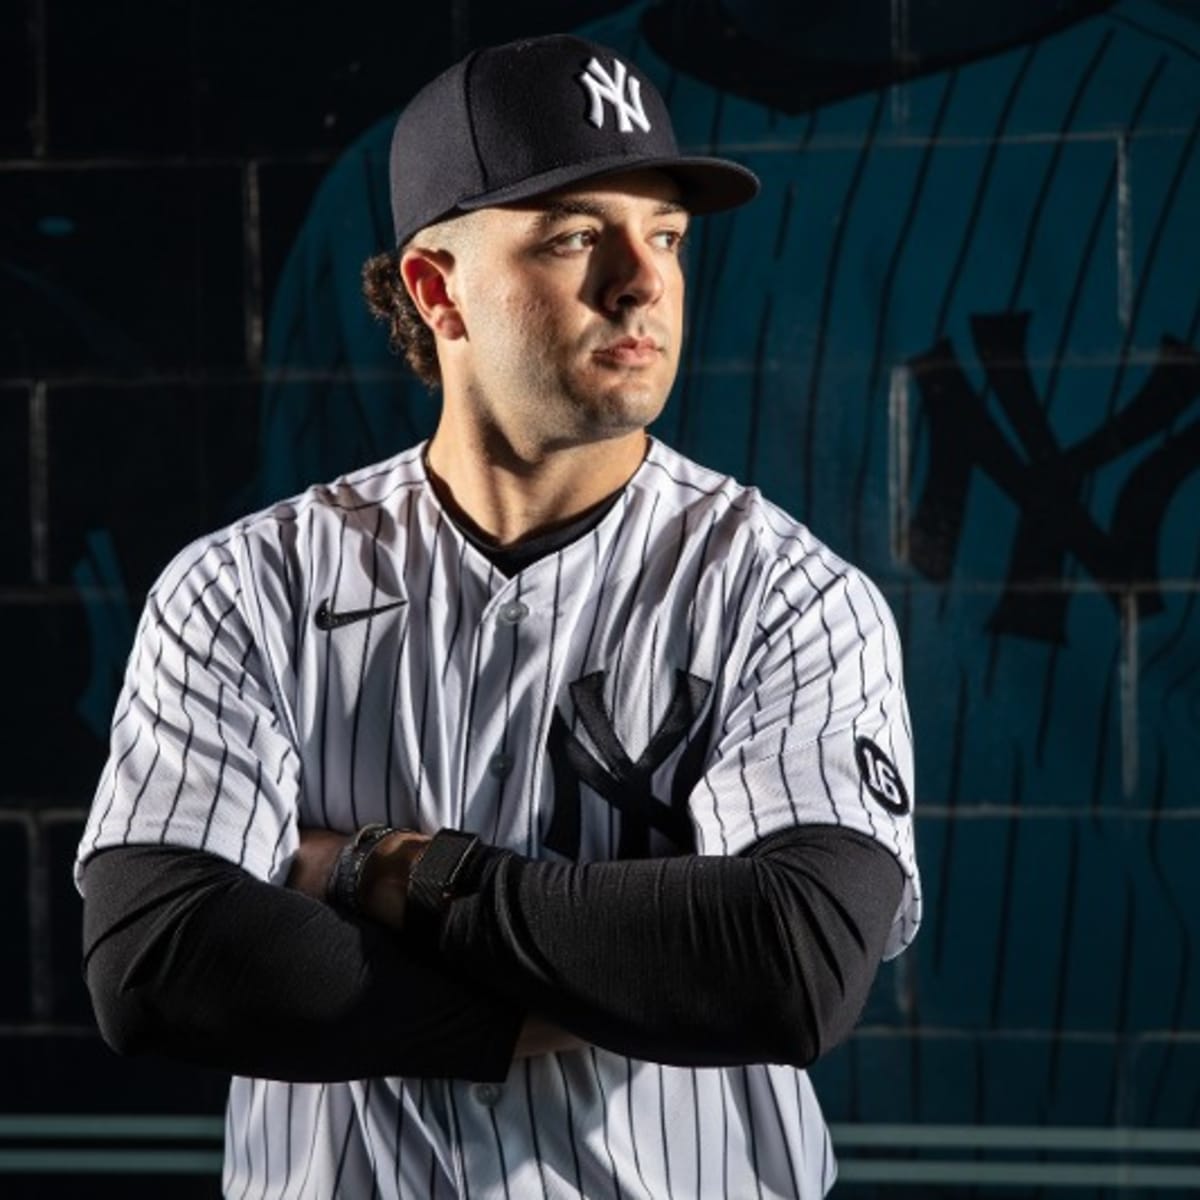 Yankees gave prospects Jasson Dominguez, Austin Wells spring